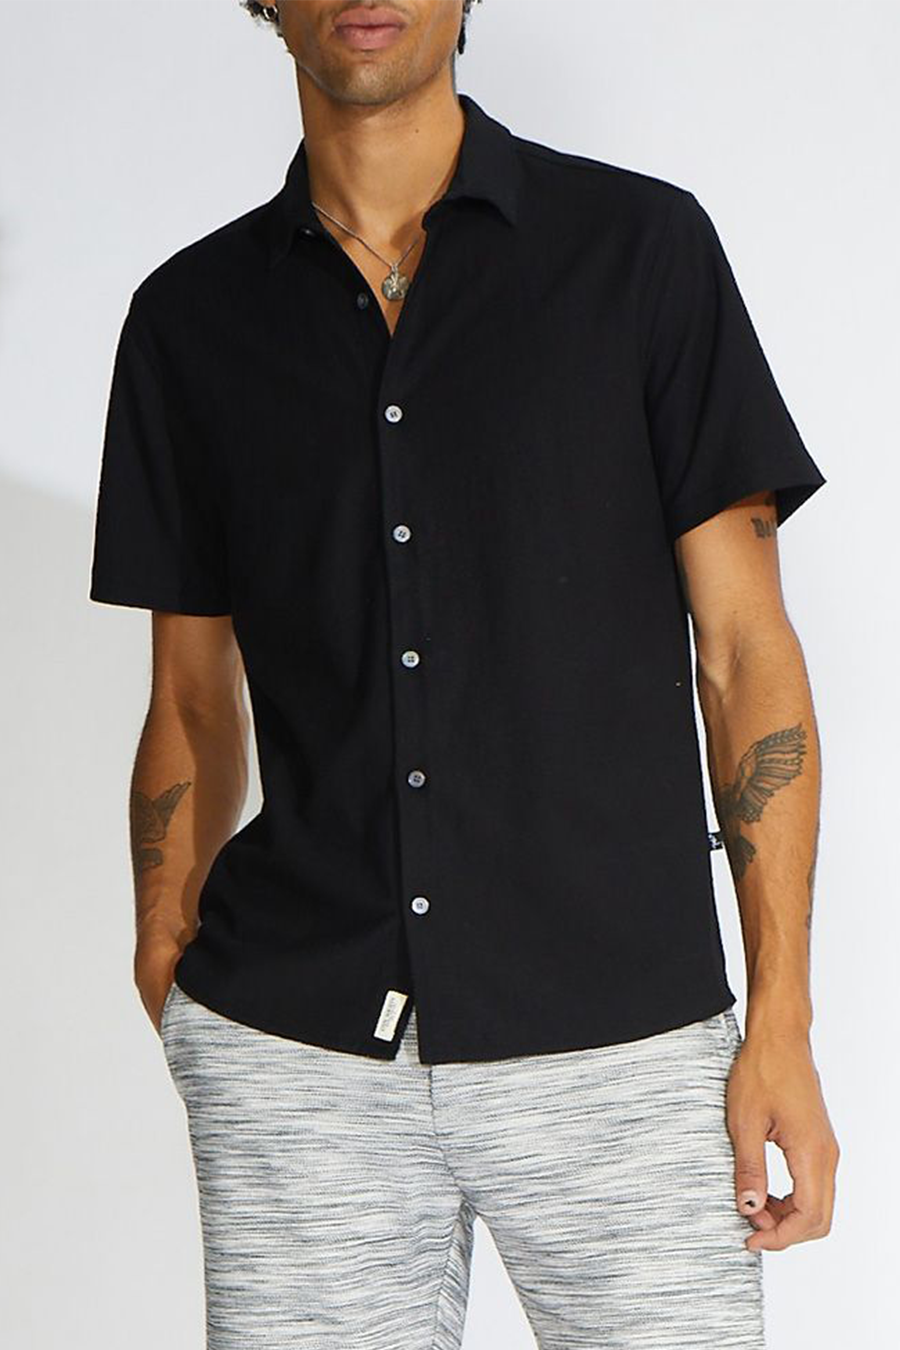 Aleo Textured Knit Shirt | Black - Main Image Number 1 of 1